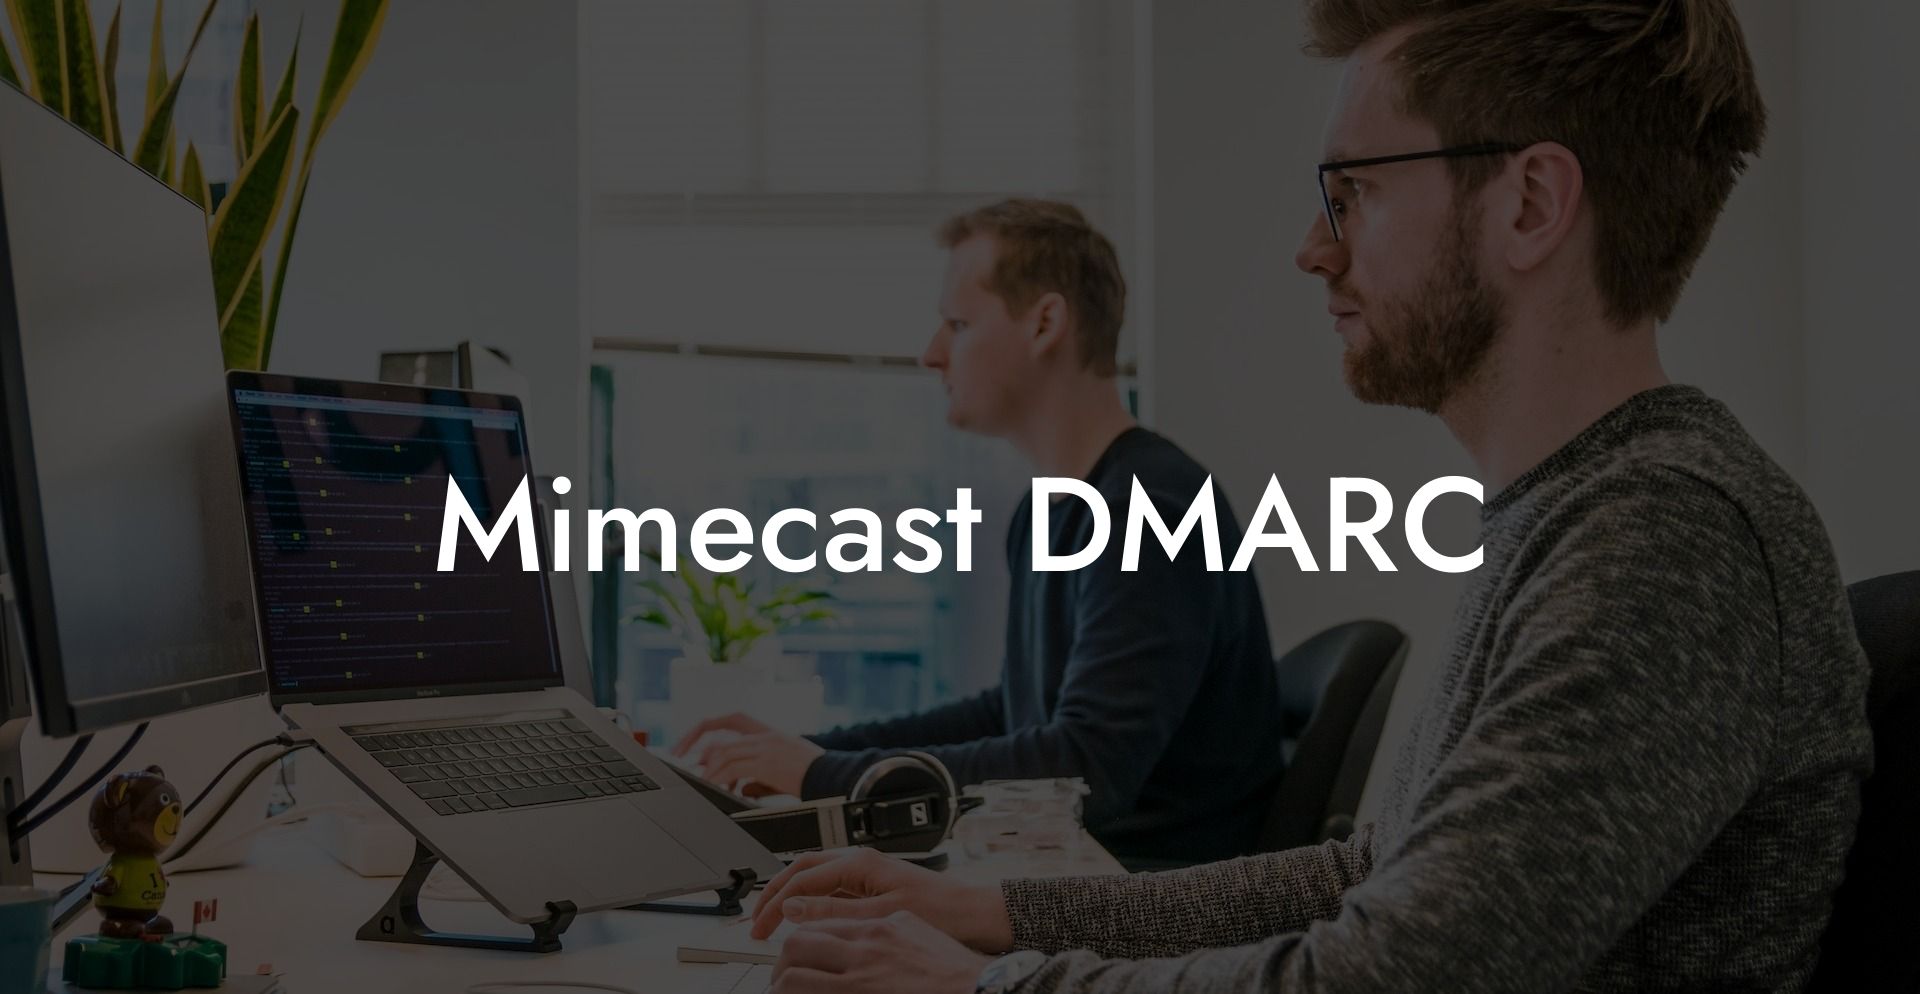 Mimecast DMARC